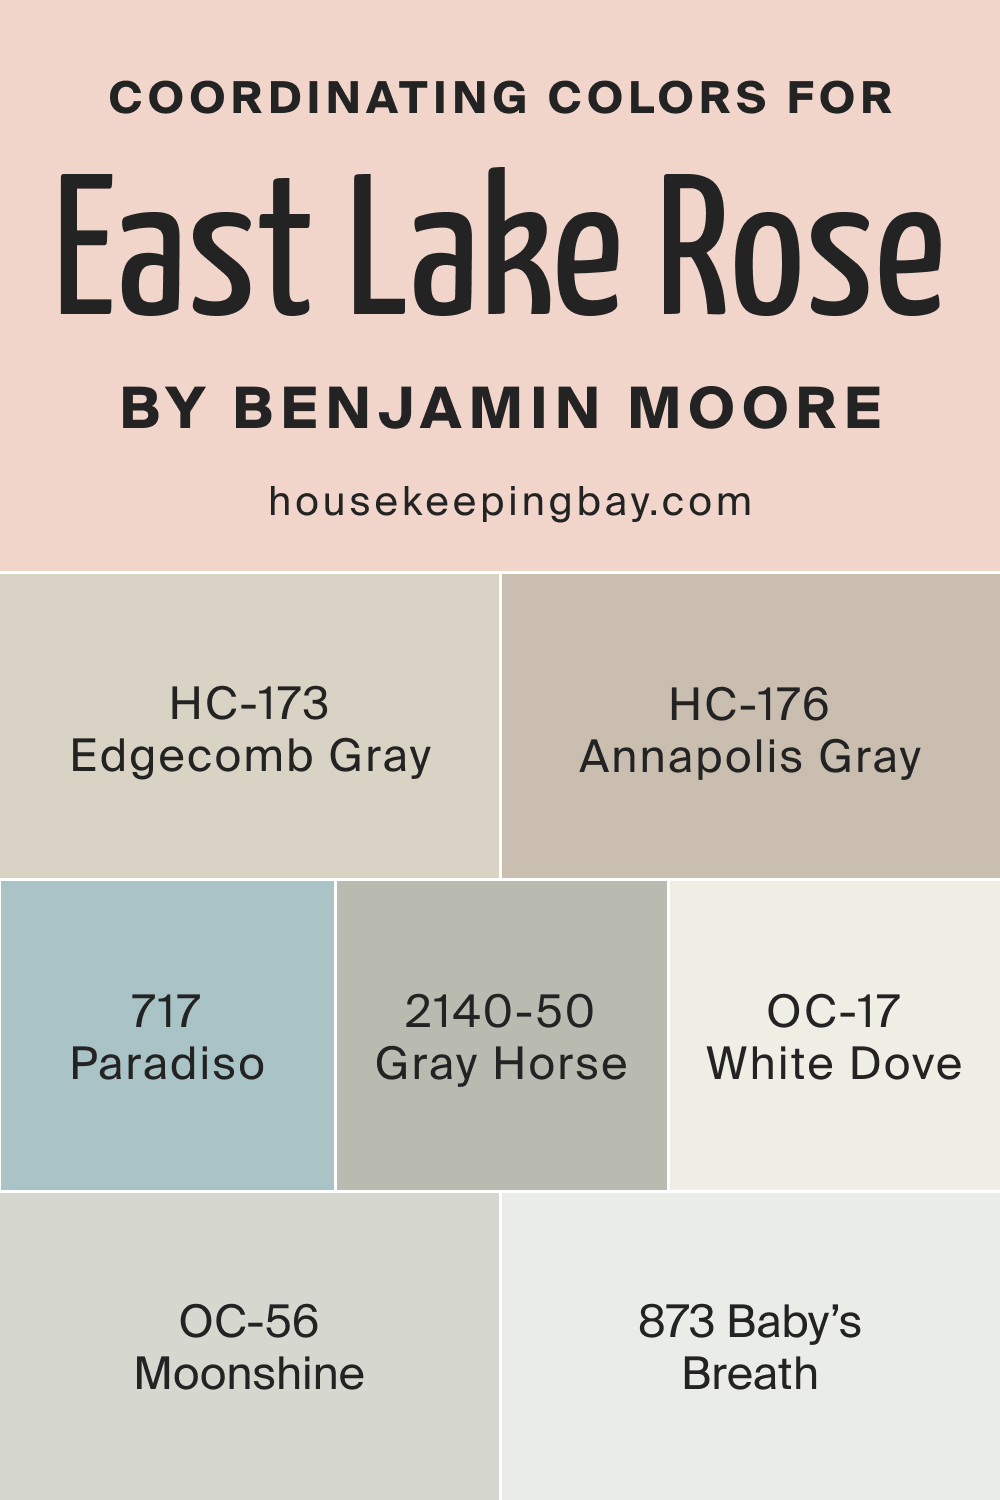 Coordinating Colors for BM East Lake Rose 043 by Benjamin Moore